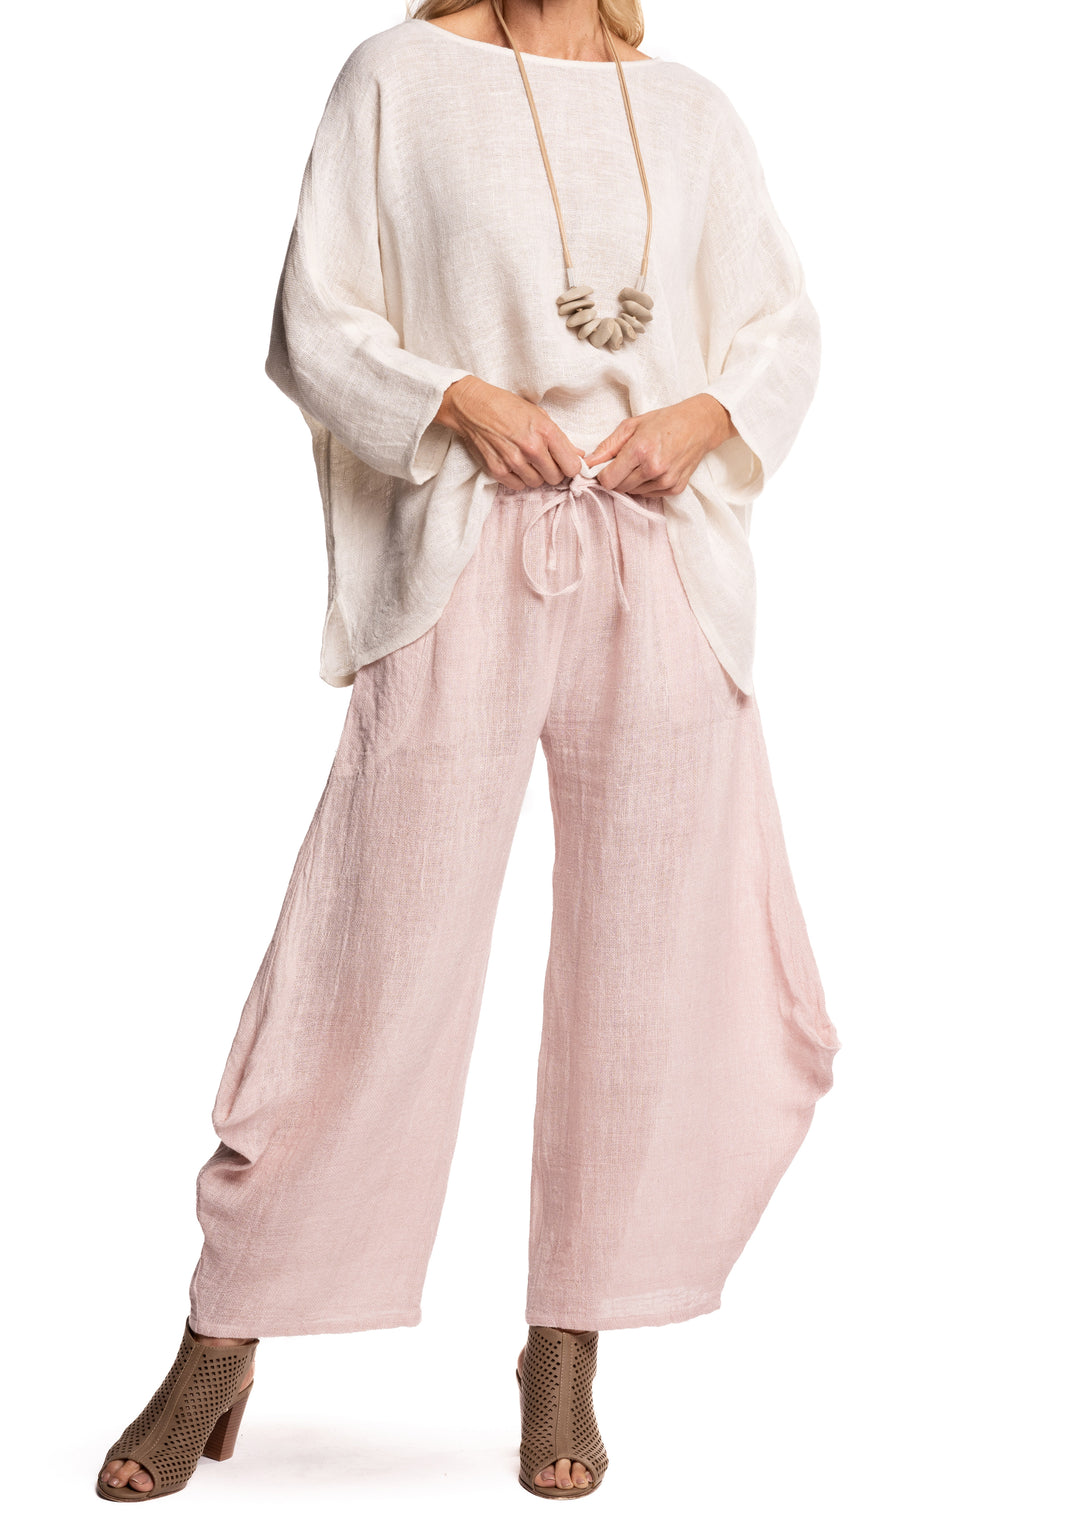 Aletha Pants in Blush - Imagine Fashion